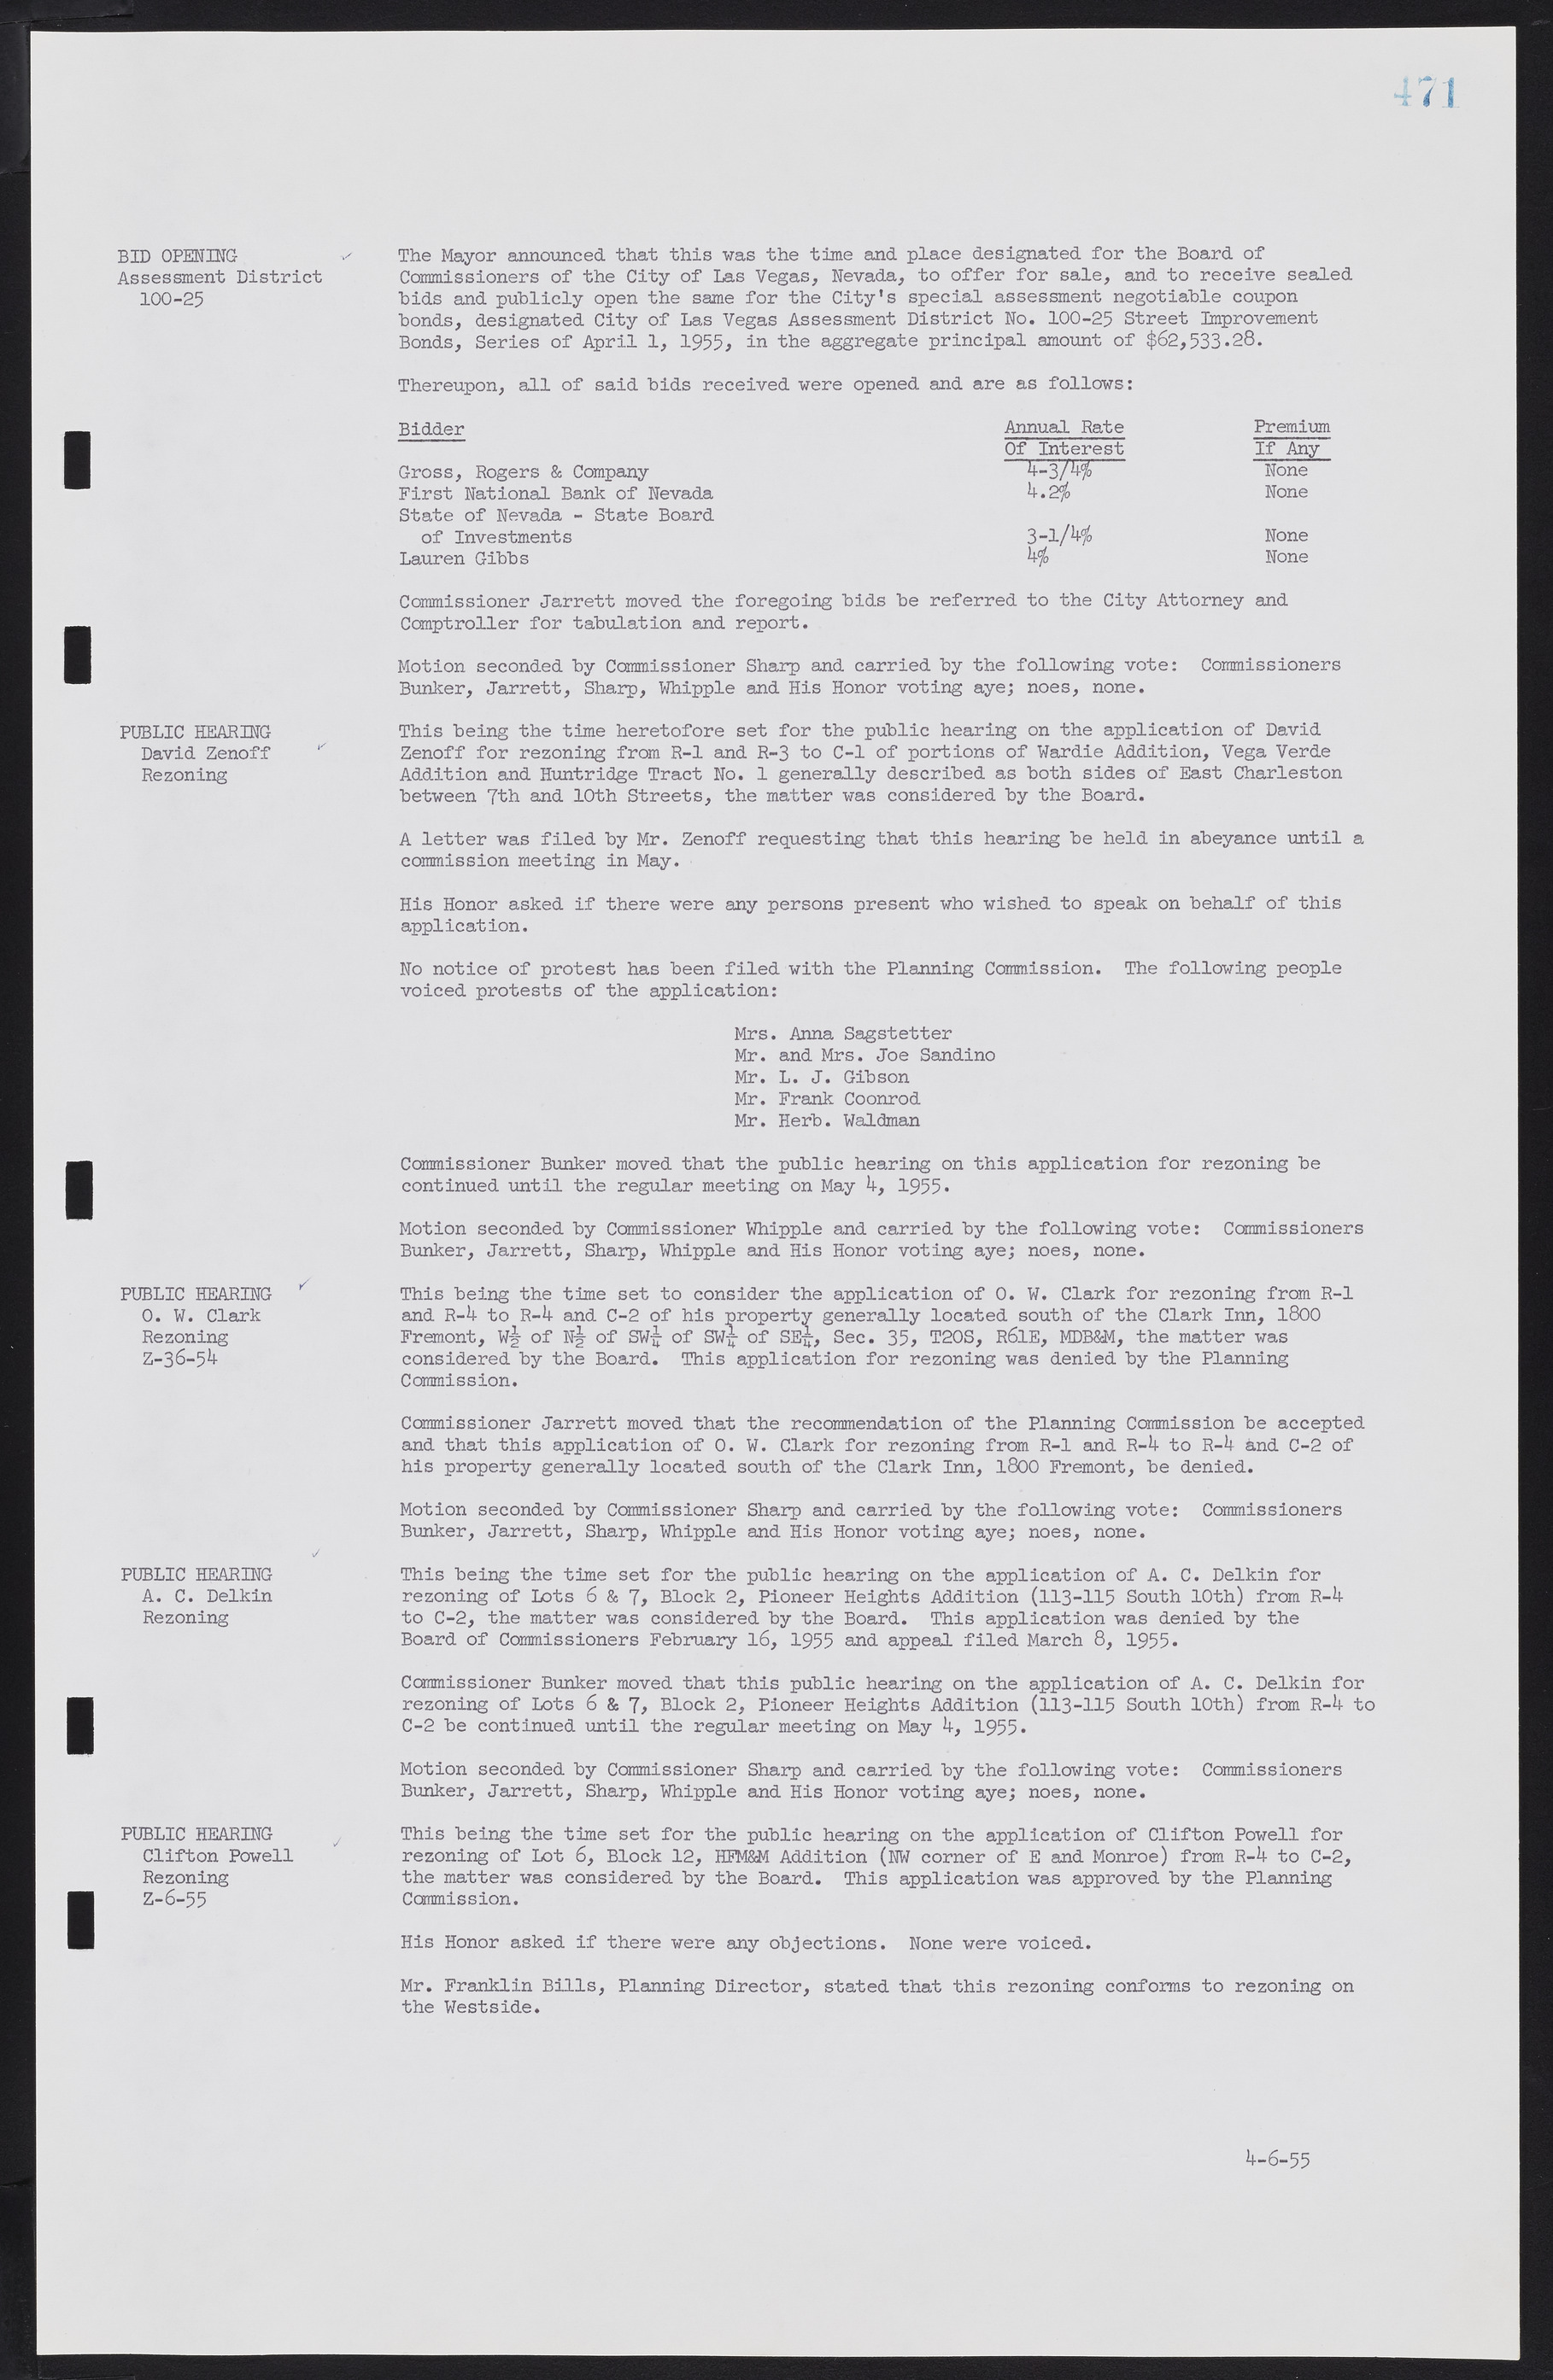 Las Vegas City Commission Minutes, February 17, 1954 to September 21, 1955, lvc000009-477